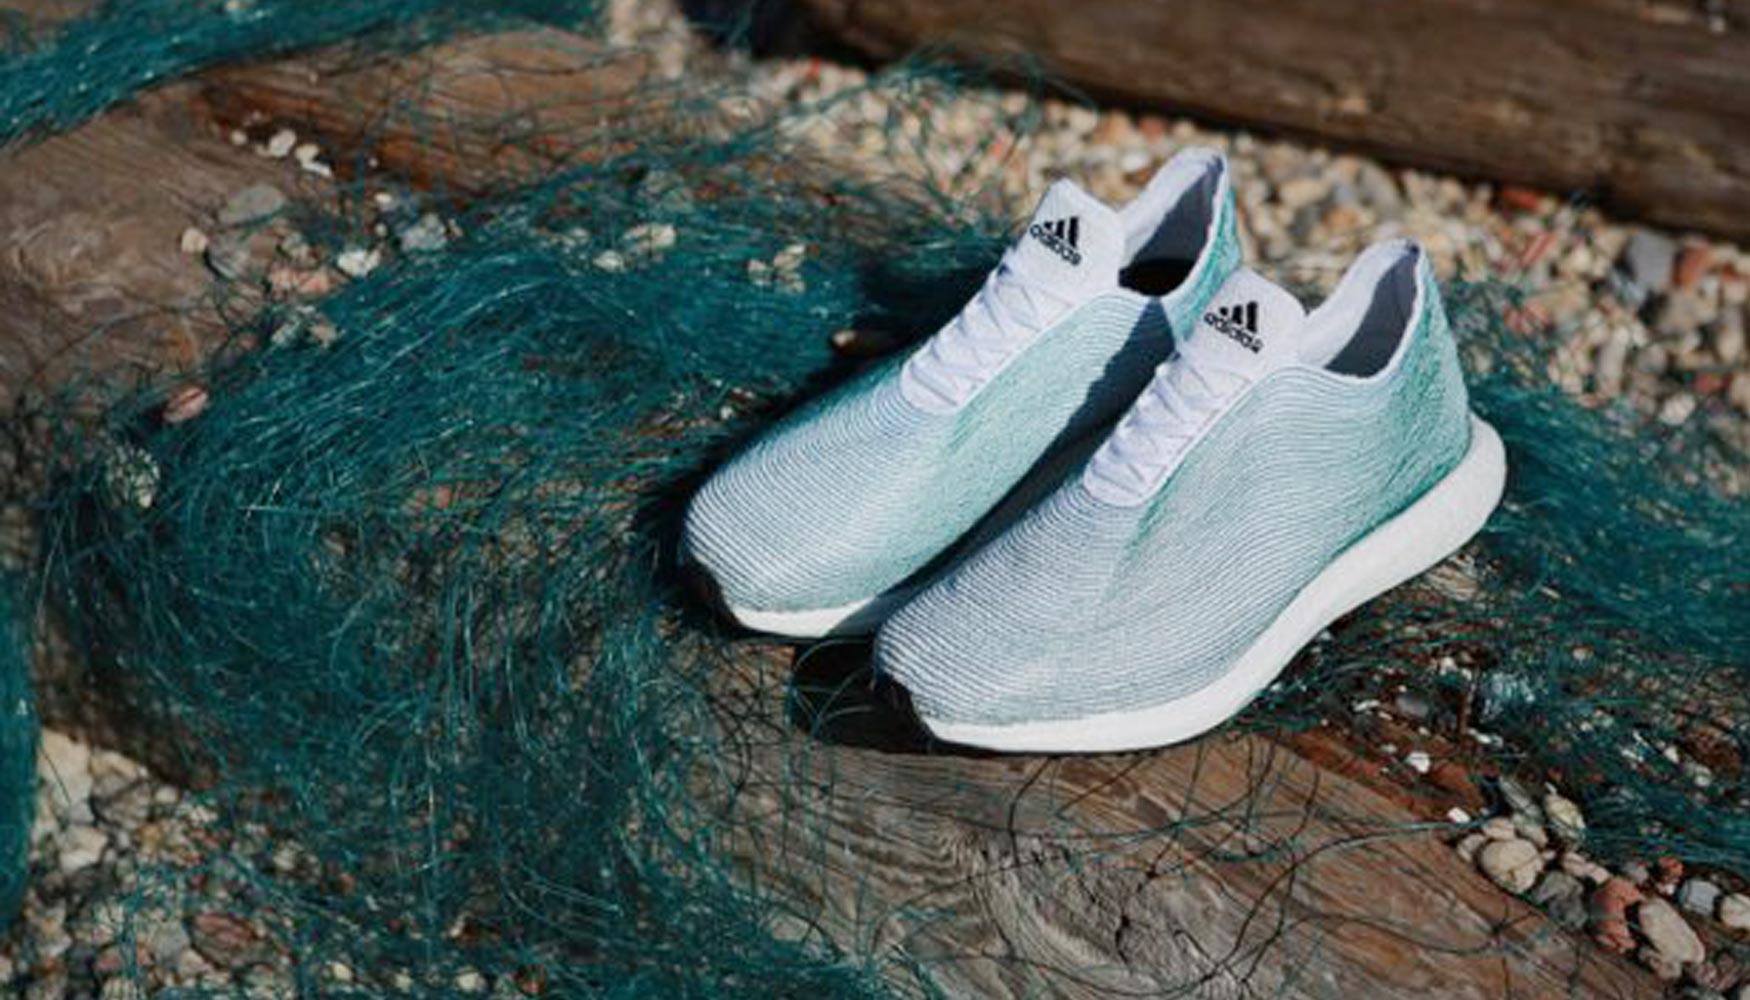 Caballo anfitrión Excepcional Adidas crea unas revolucionarias zapatillas 100% ecológicas - Textil